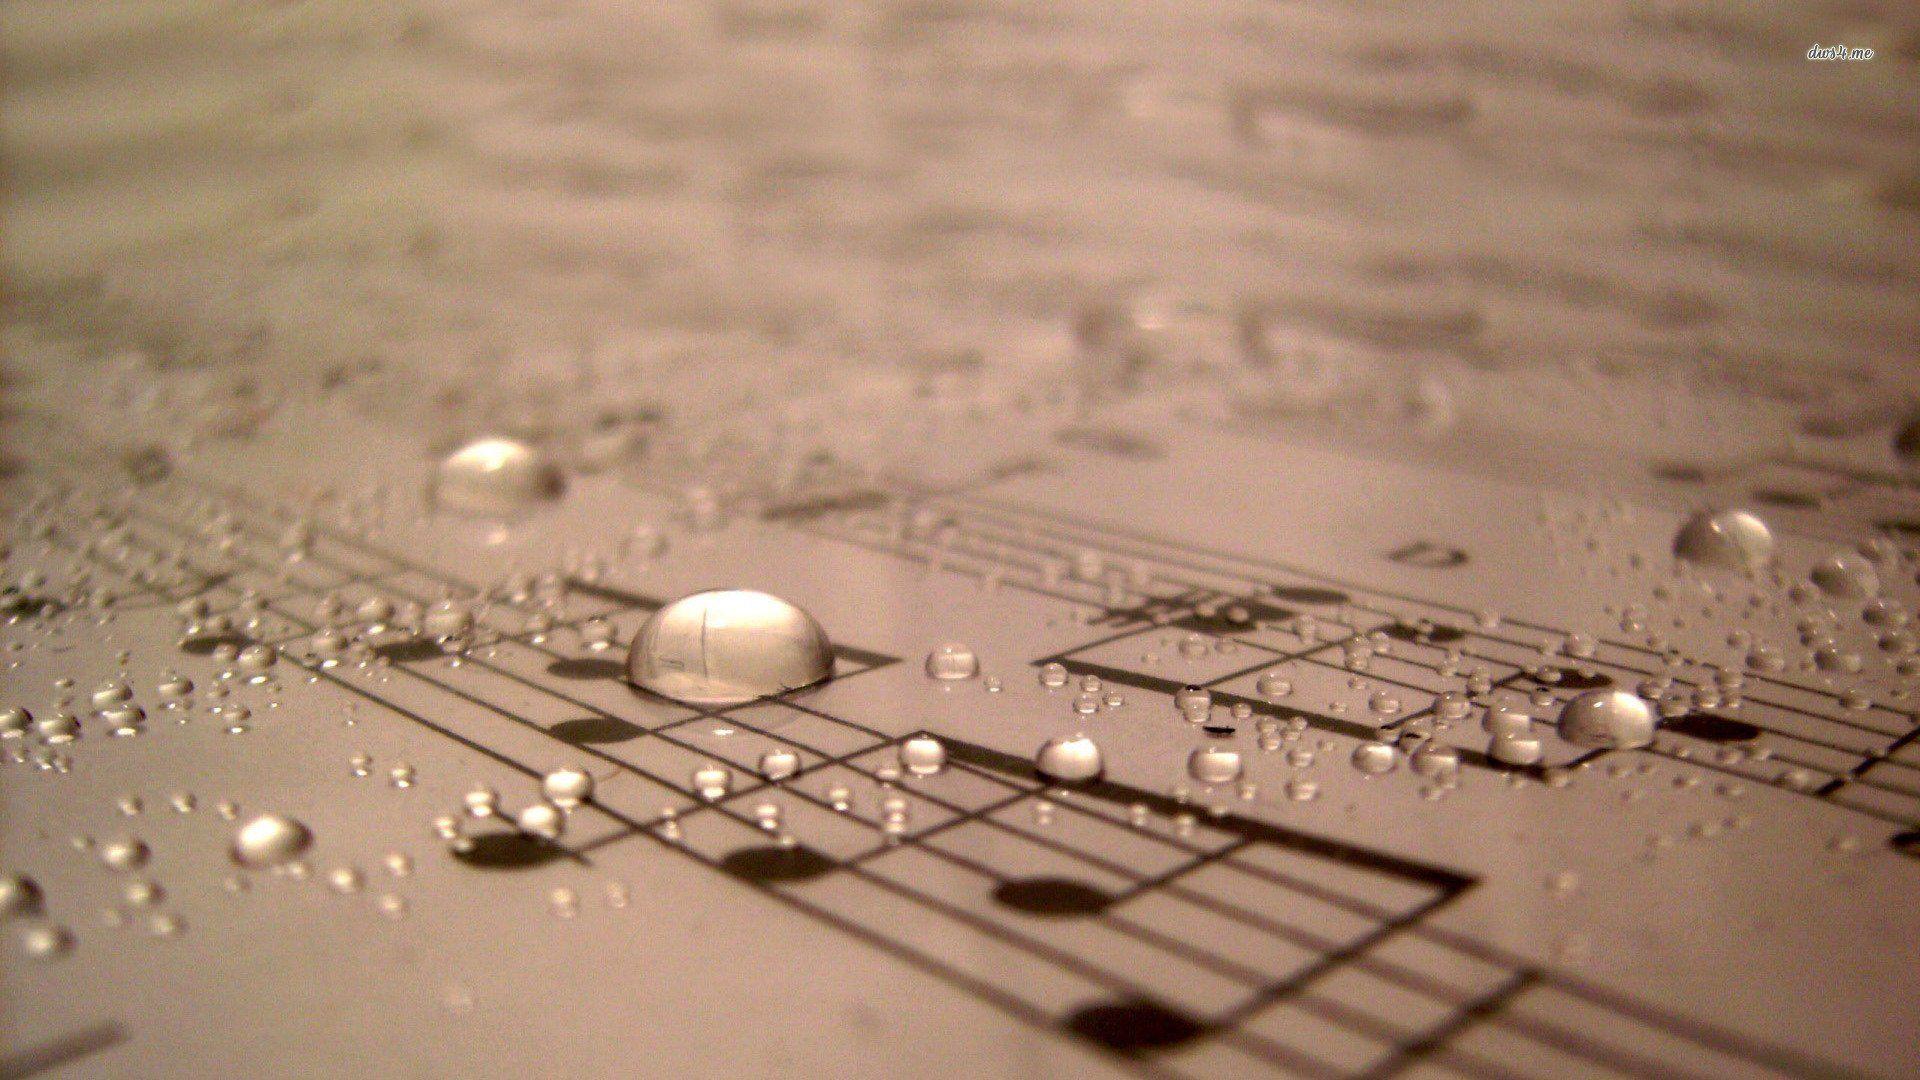 Sheet Music Wallpaper, HD Creative Sheet Music Image, Full HD